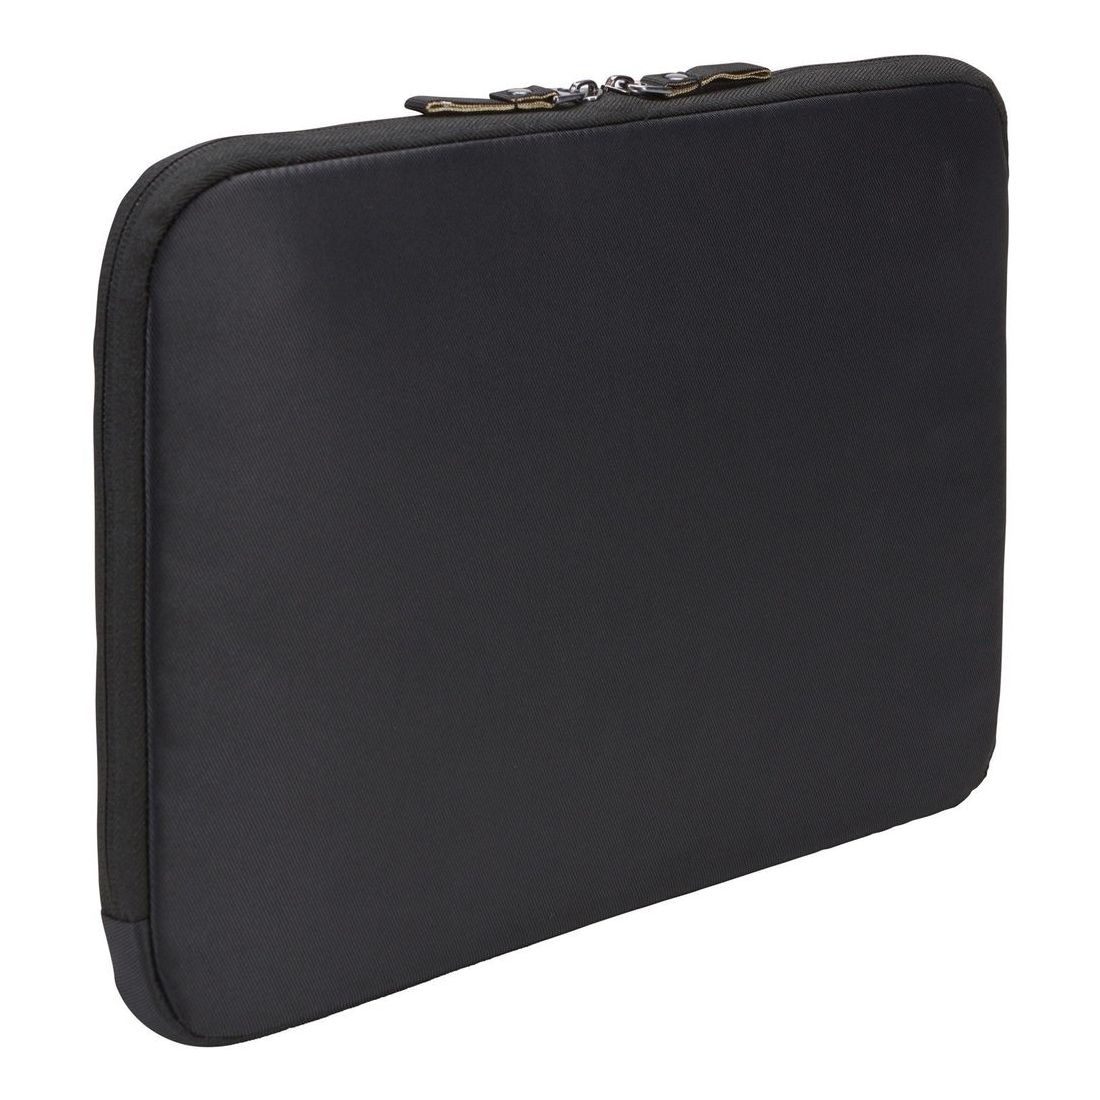 Case Logic Deco Sleeve Black for 14-Inch Laptop